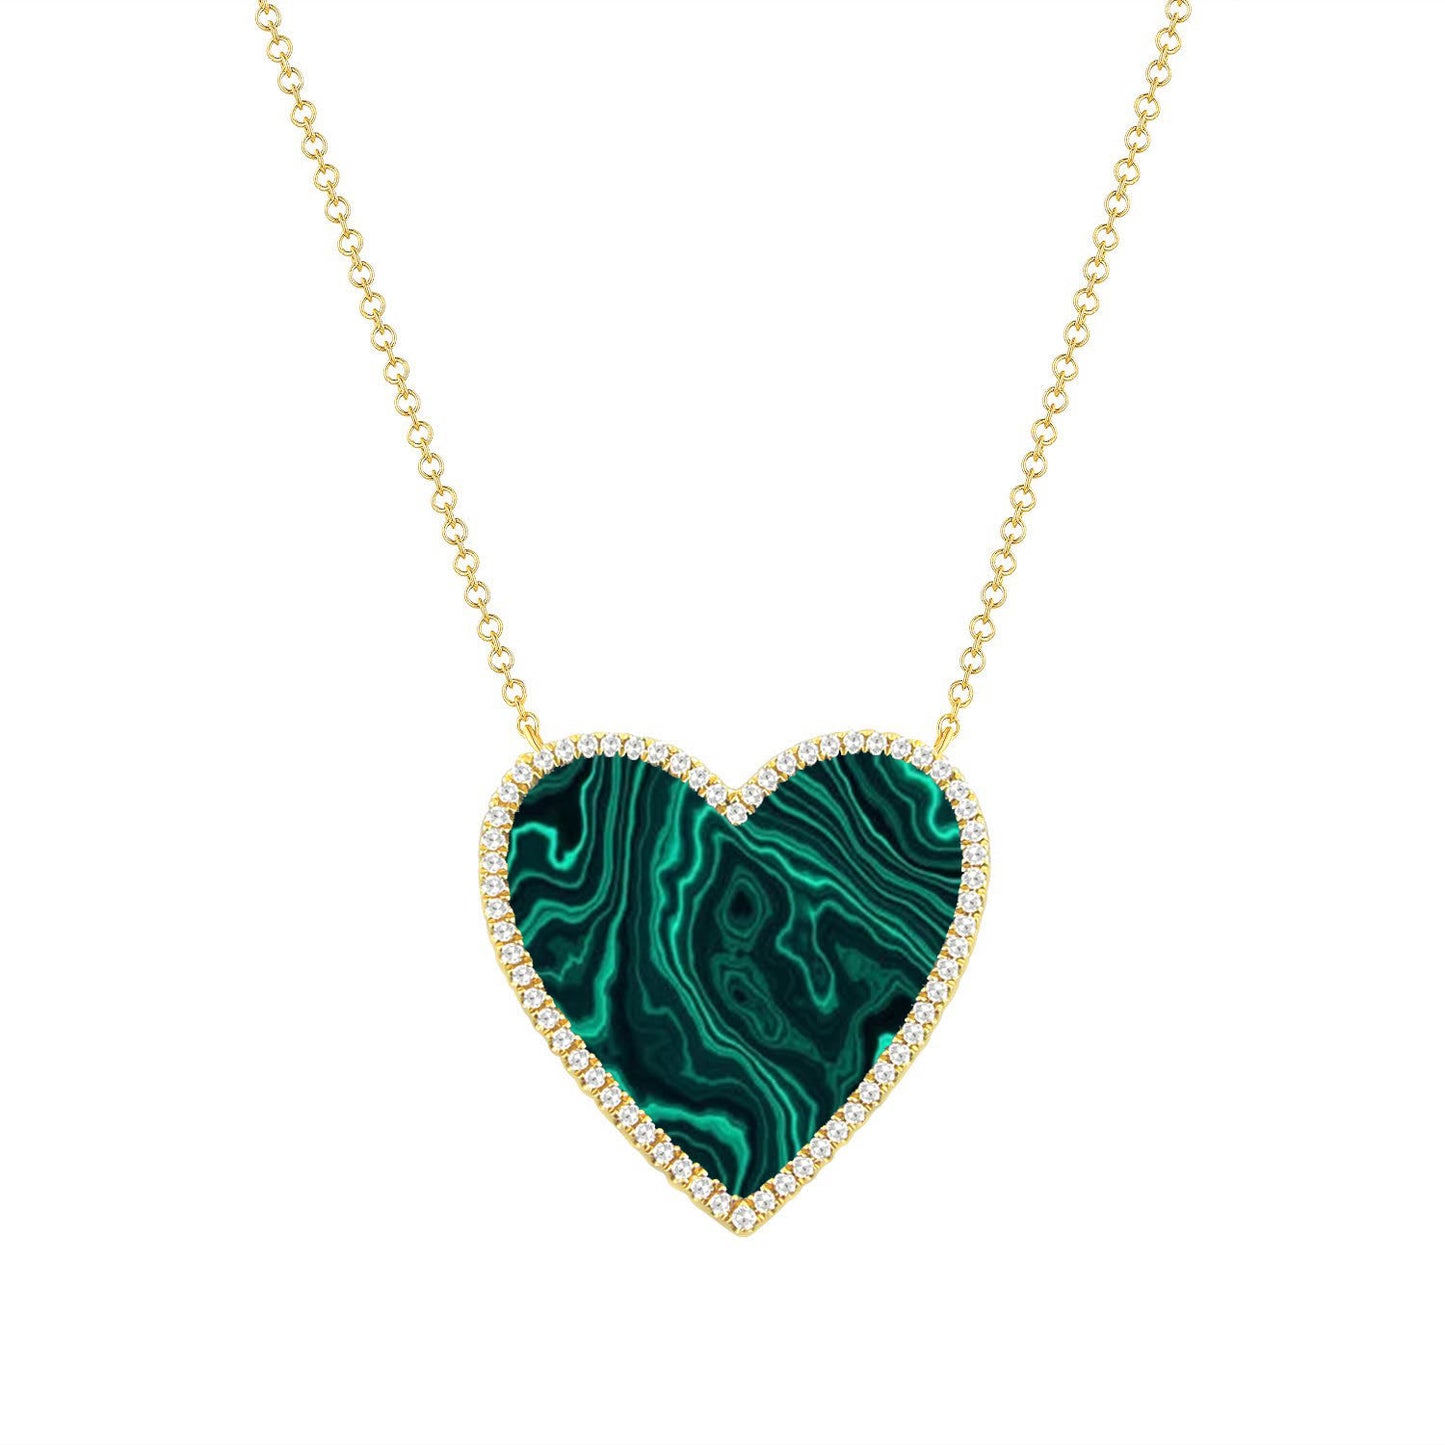 Jumbo Heart With Diamond Halo on Chain Necklace